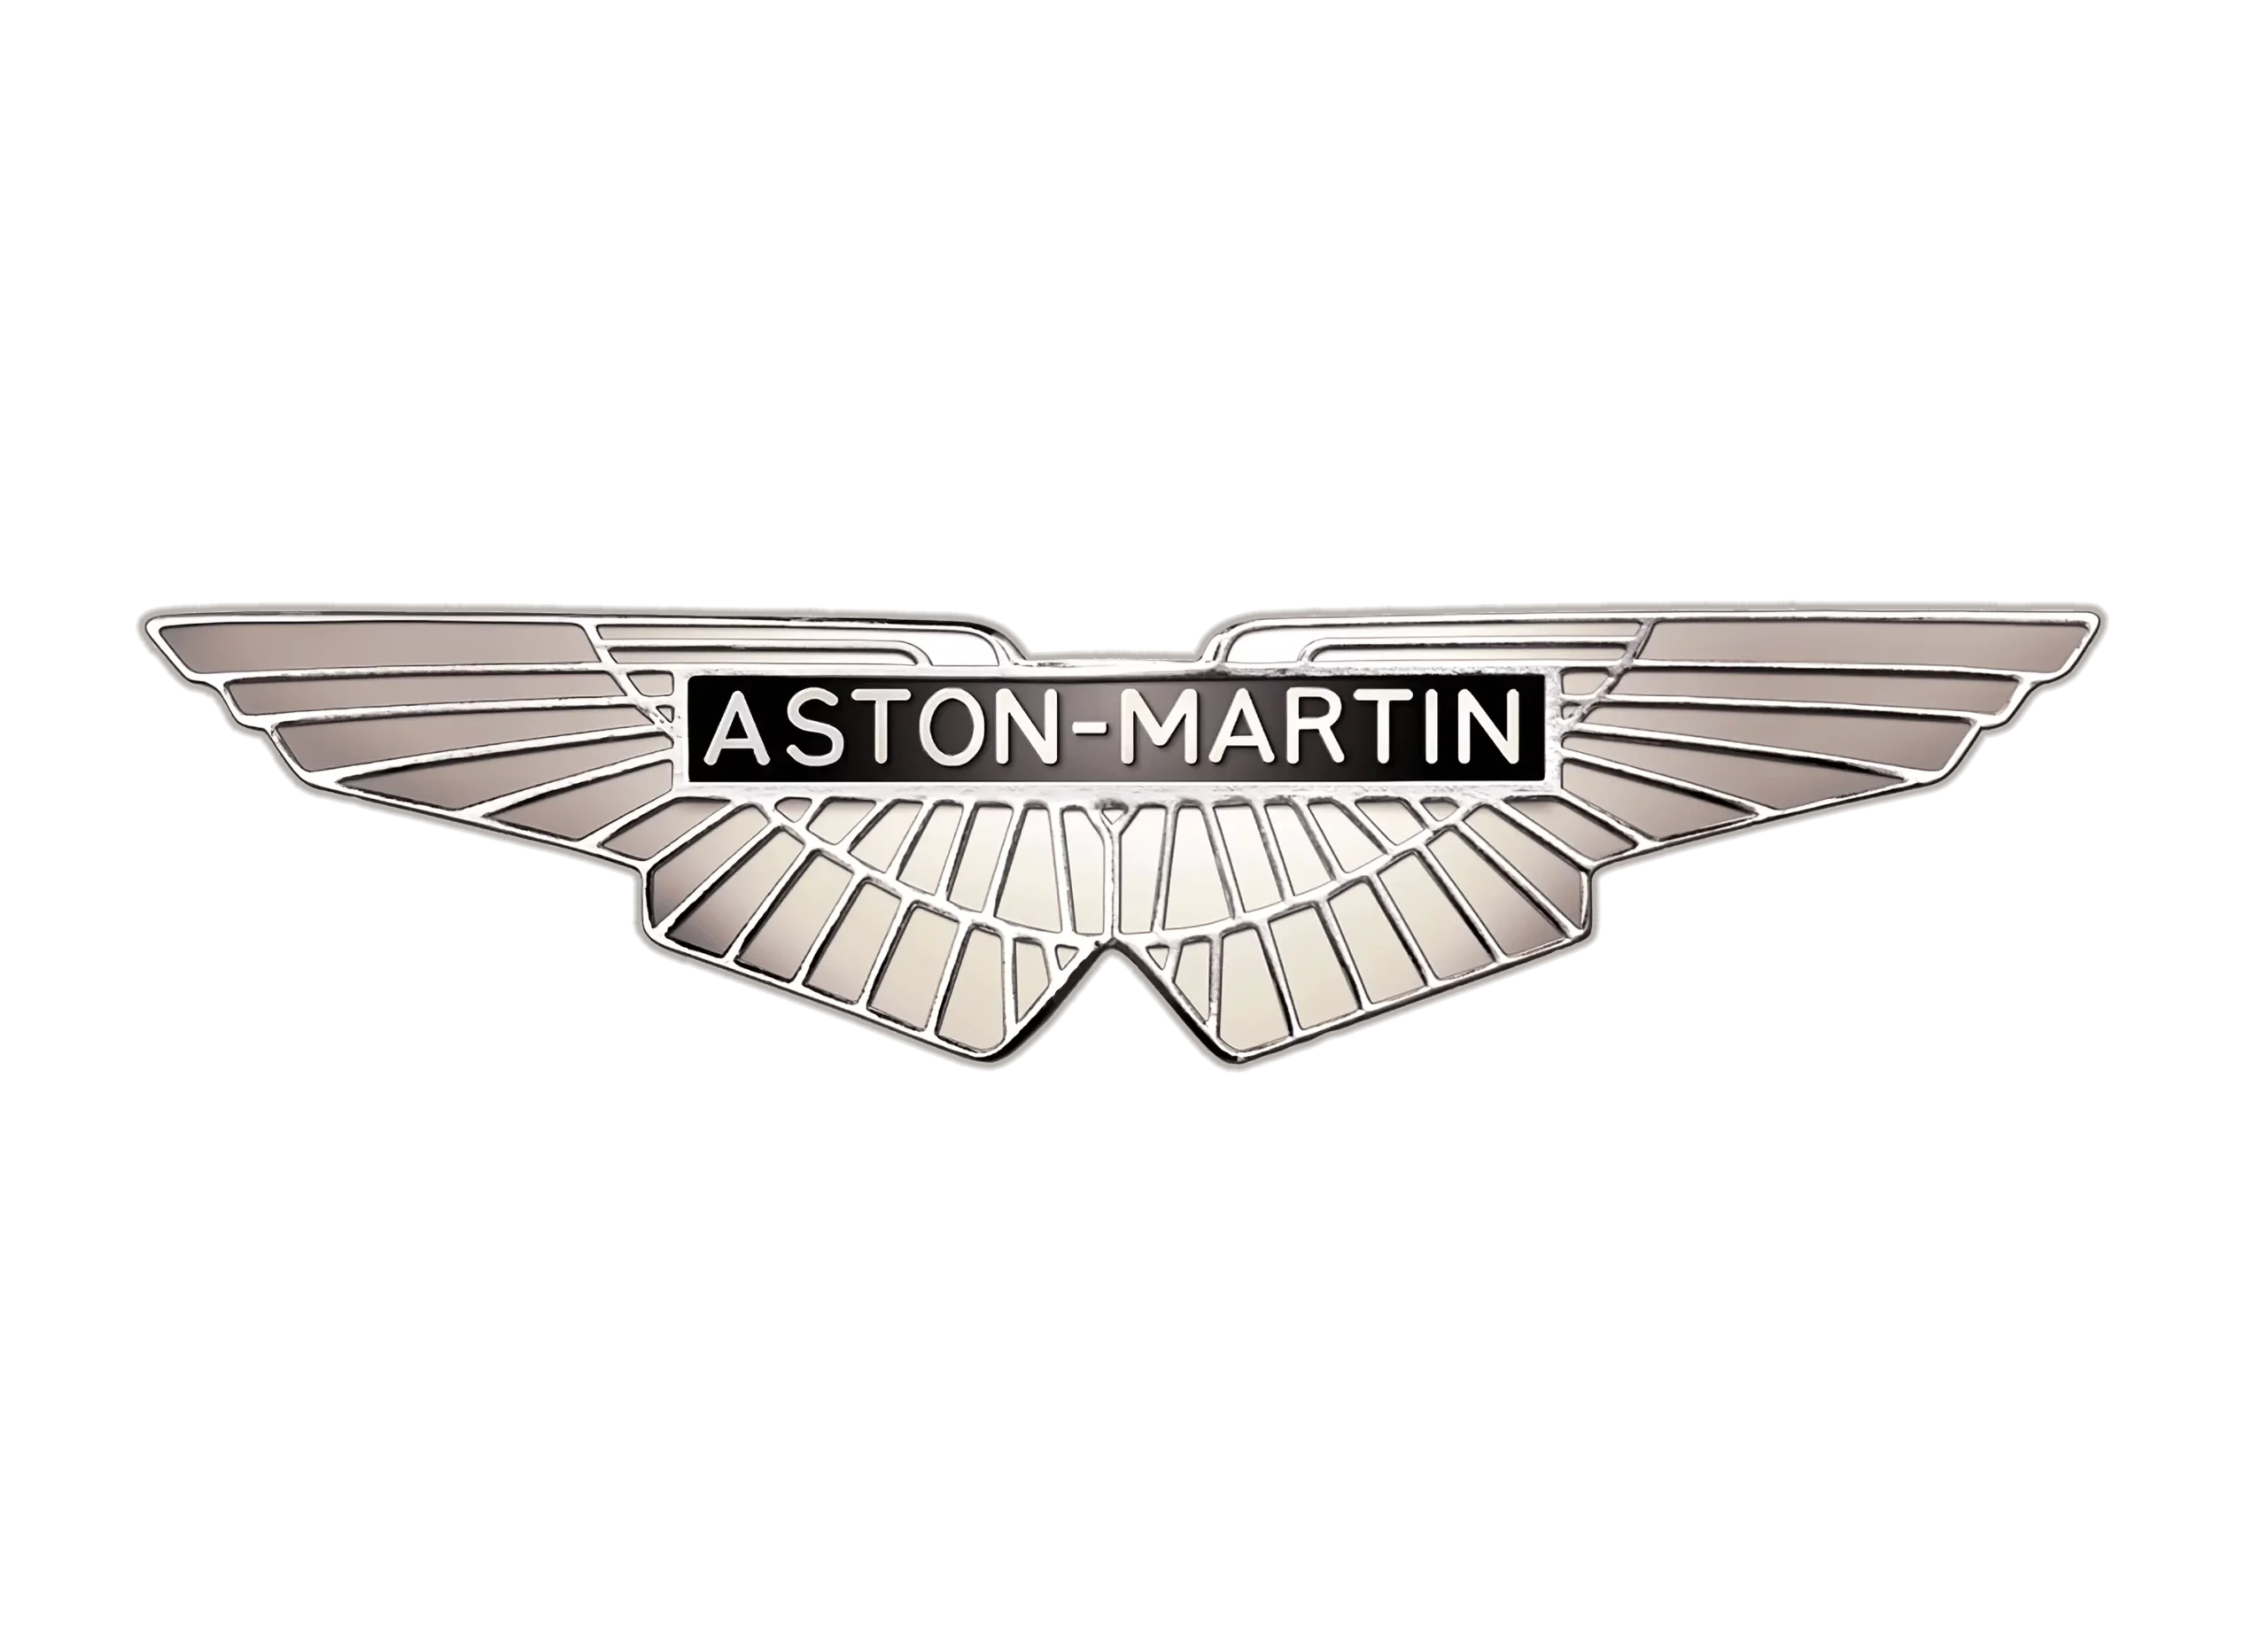 Aston Martin logo 1939-1950